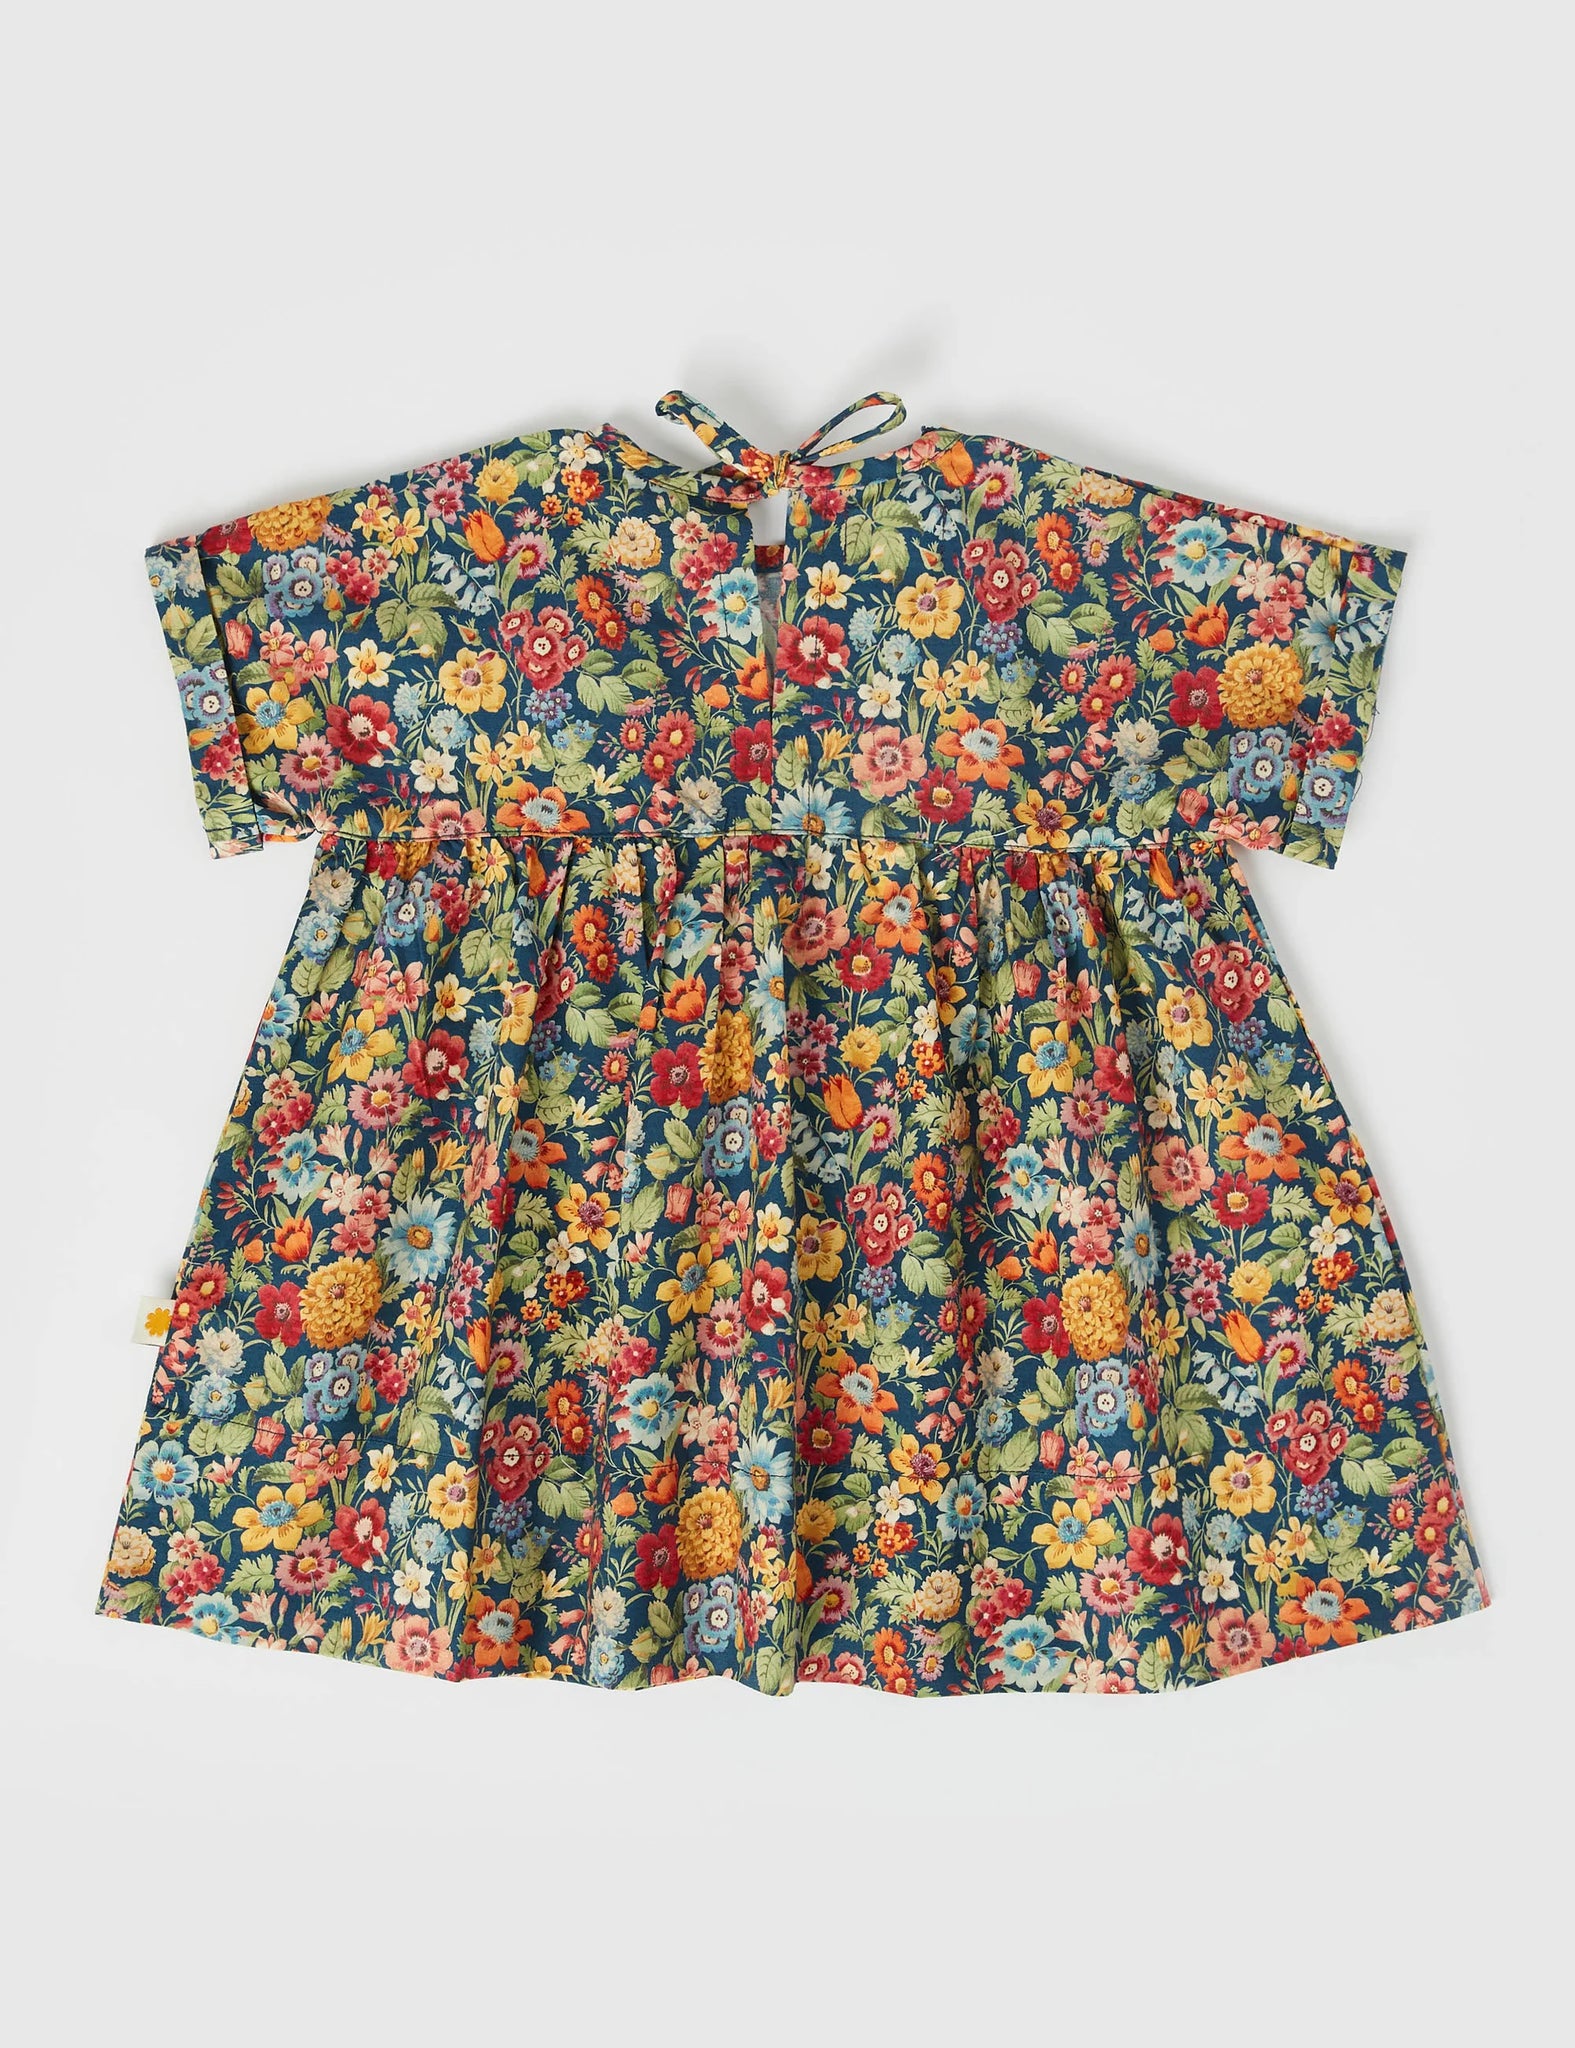 Lulu Cotton Dress - Heirloom floral